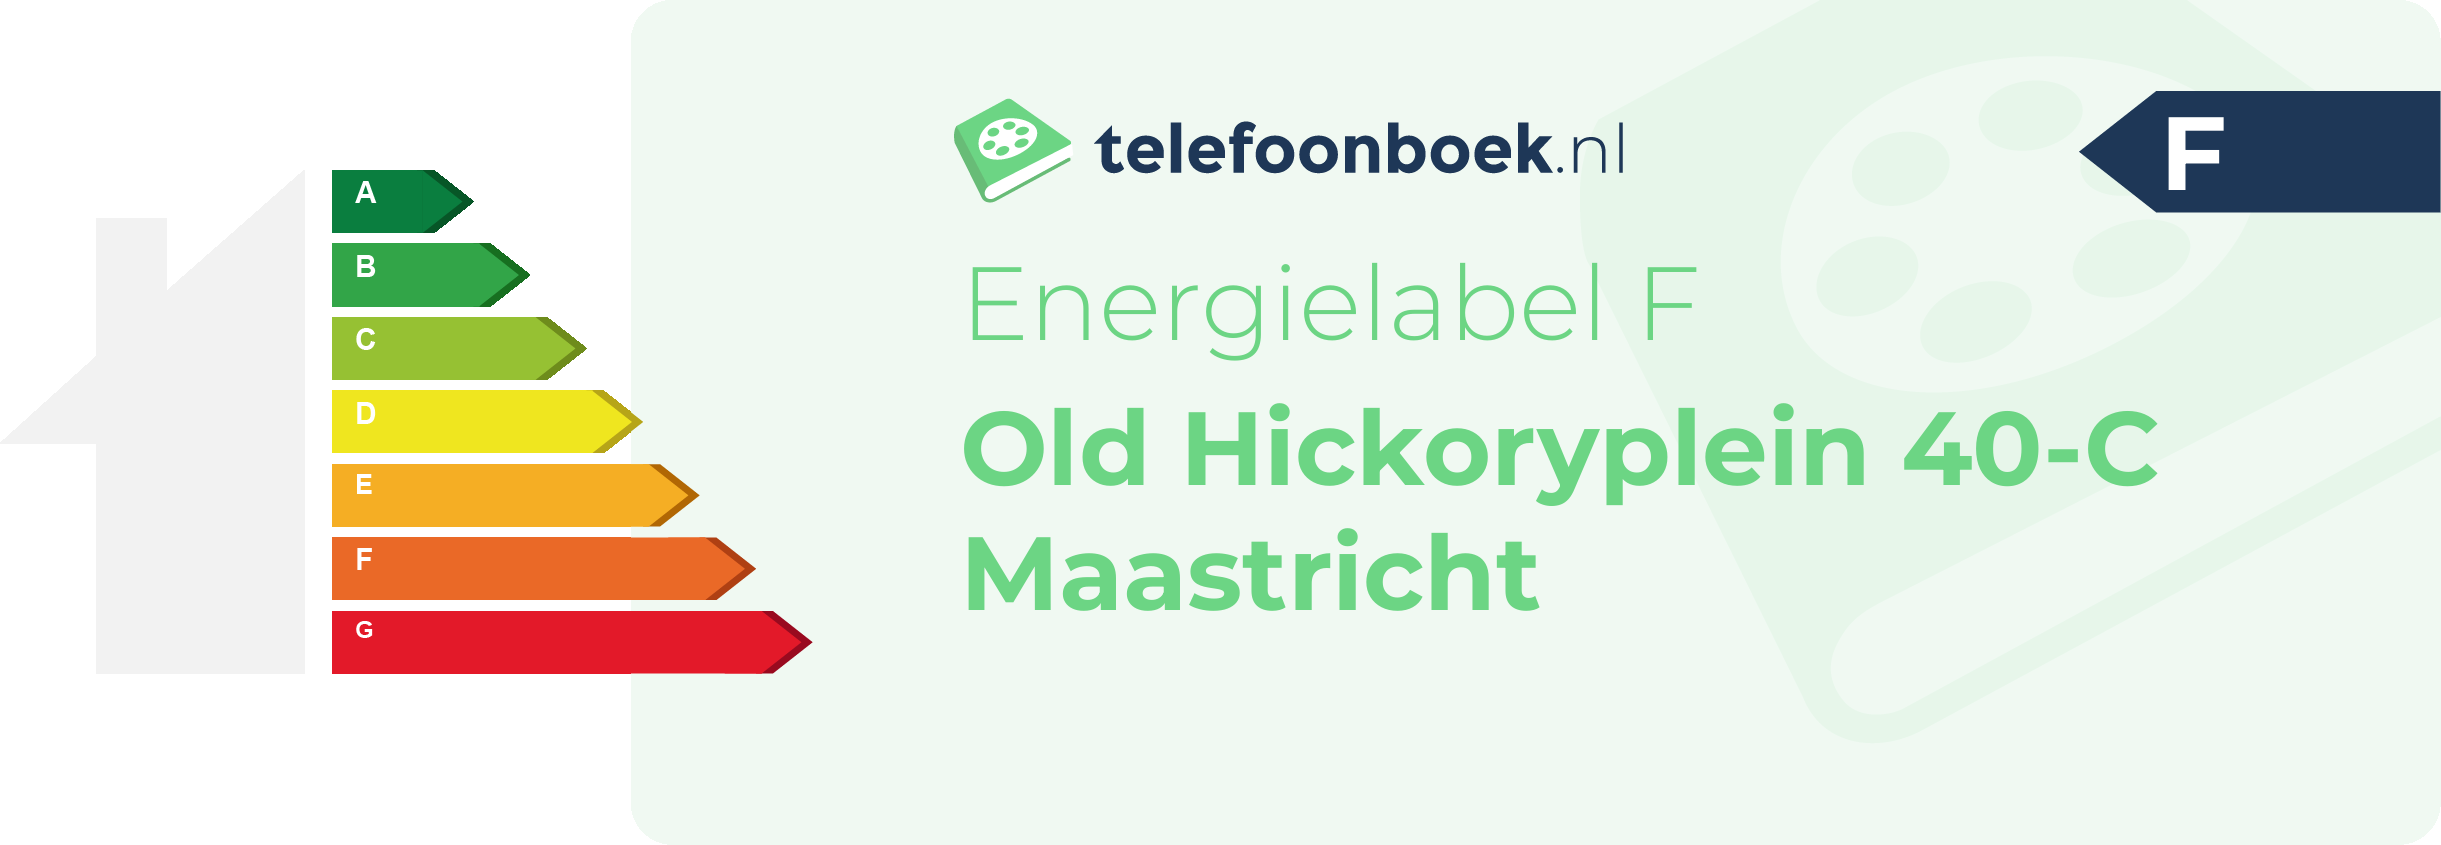 Energielabel Old Hickoryplein 40-C Maastricht